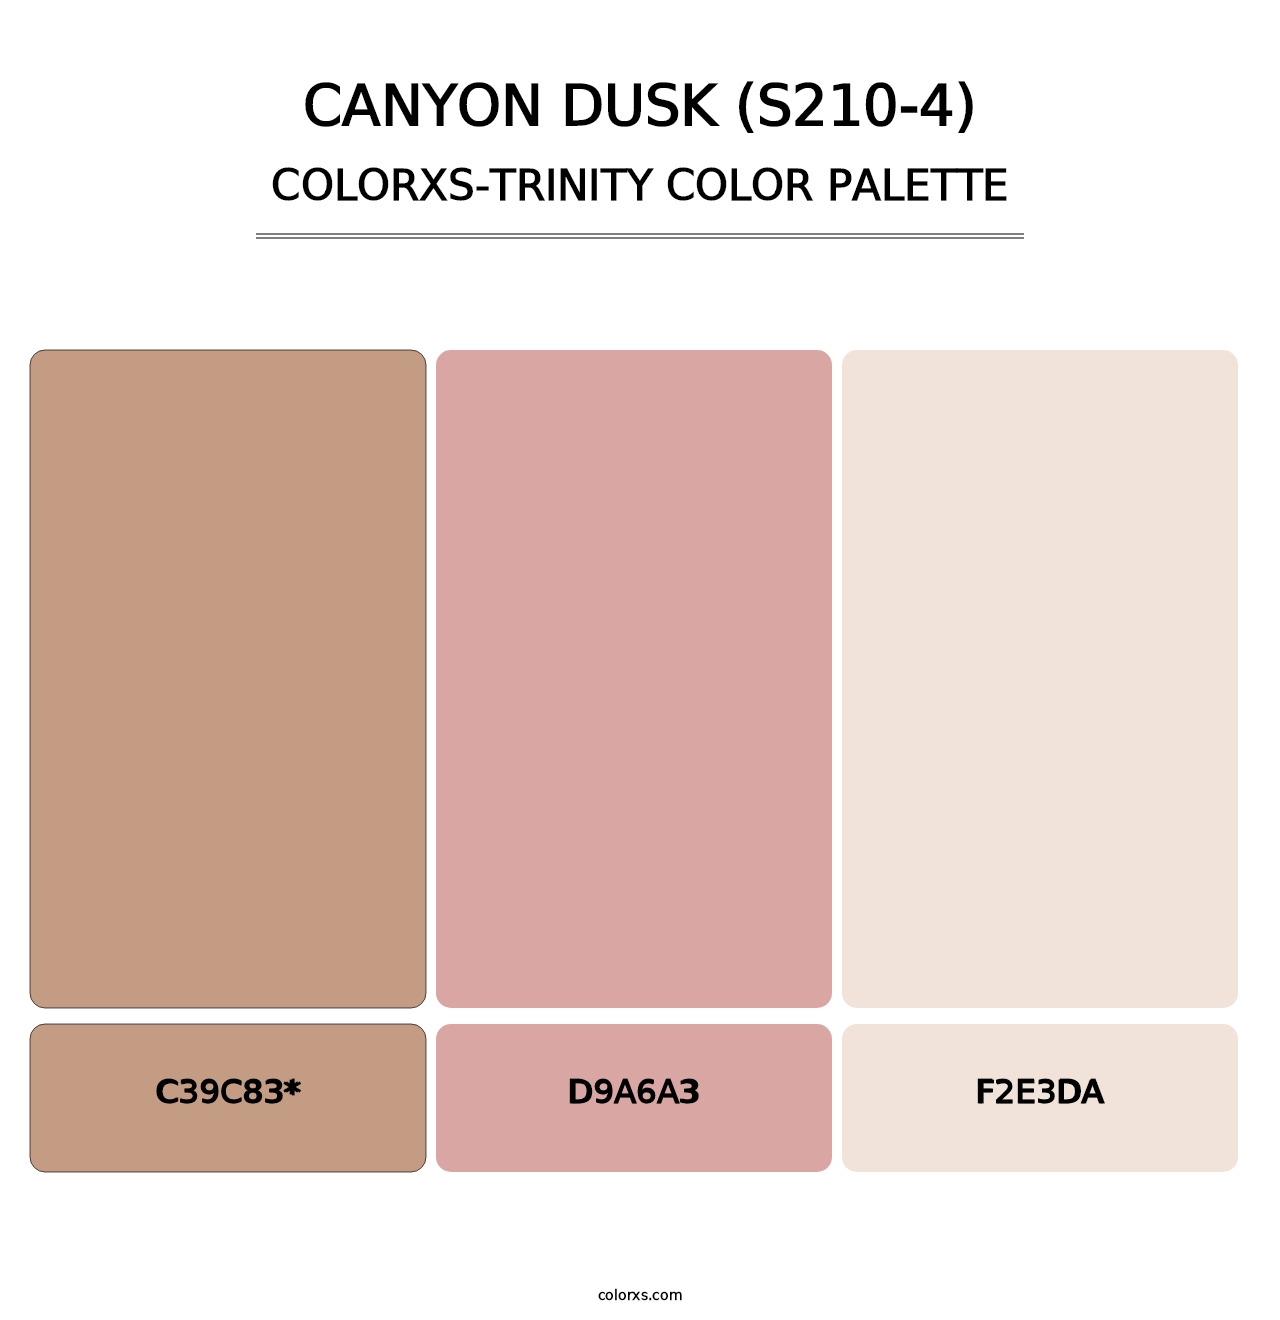 Canyon Dusk (S210-4) - Colorxs Trinity Palette